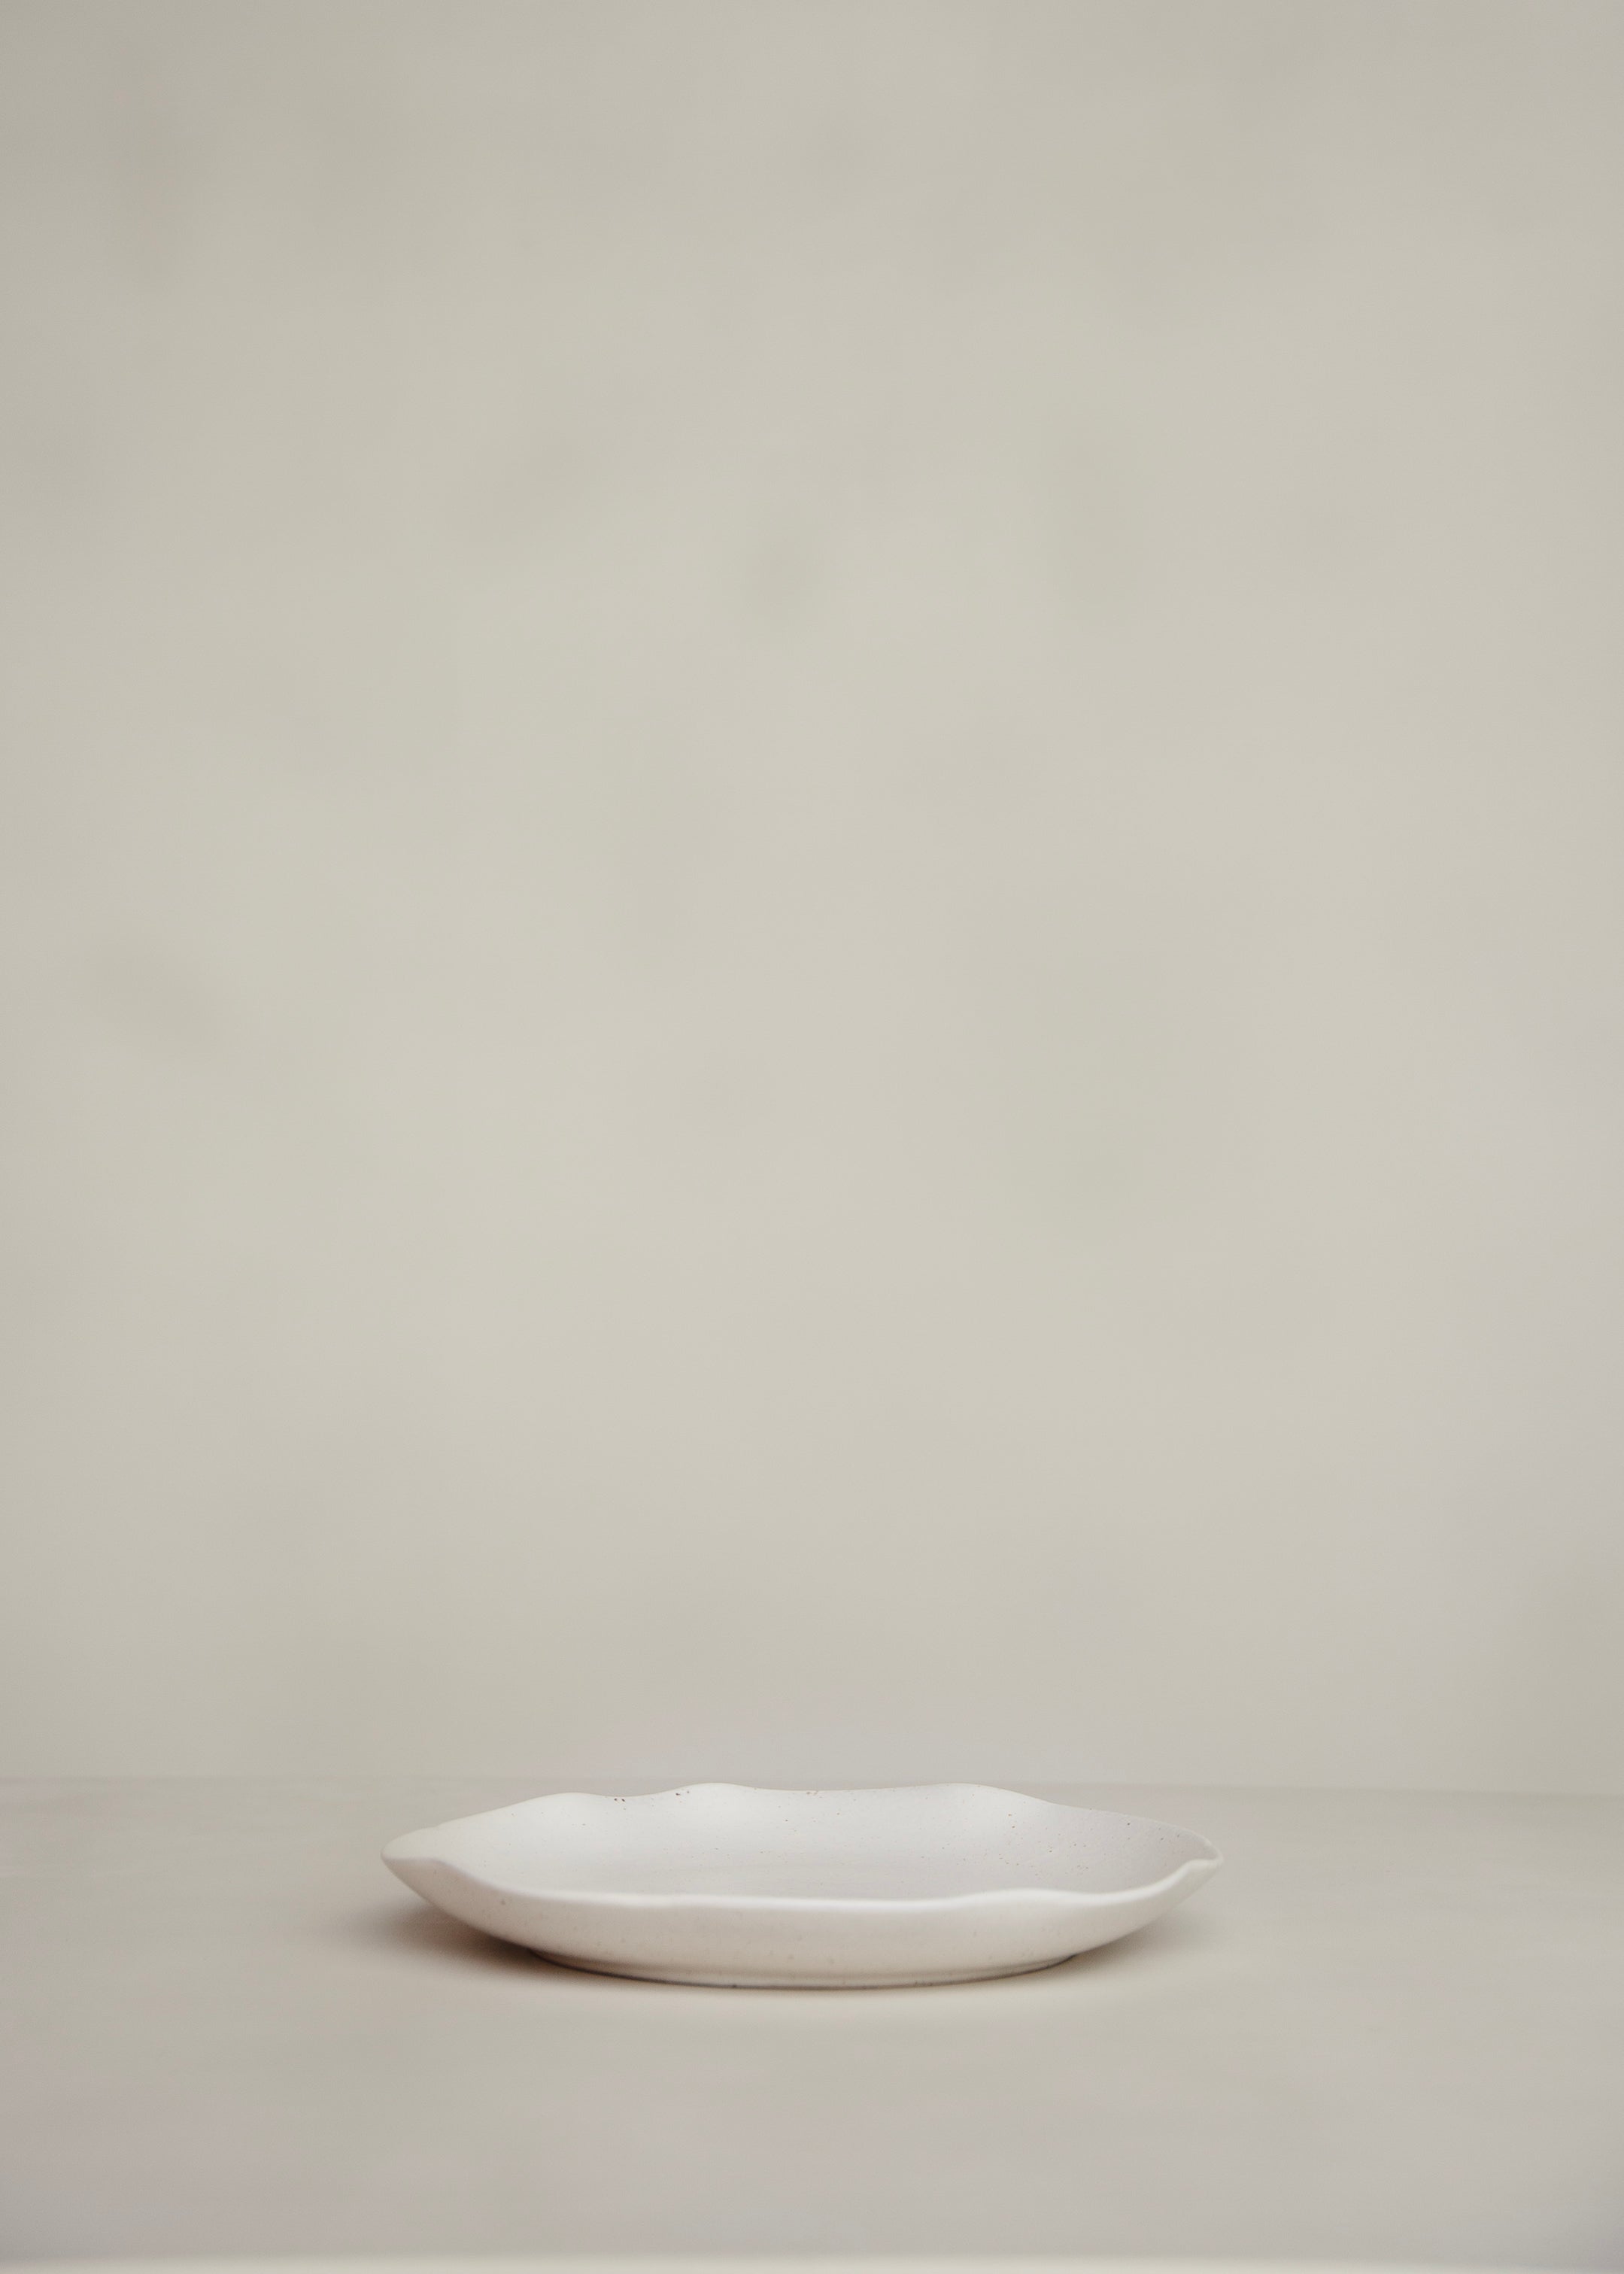 Biyung Plate 30cm / Speckled White